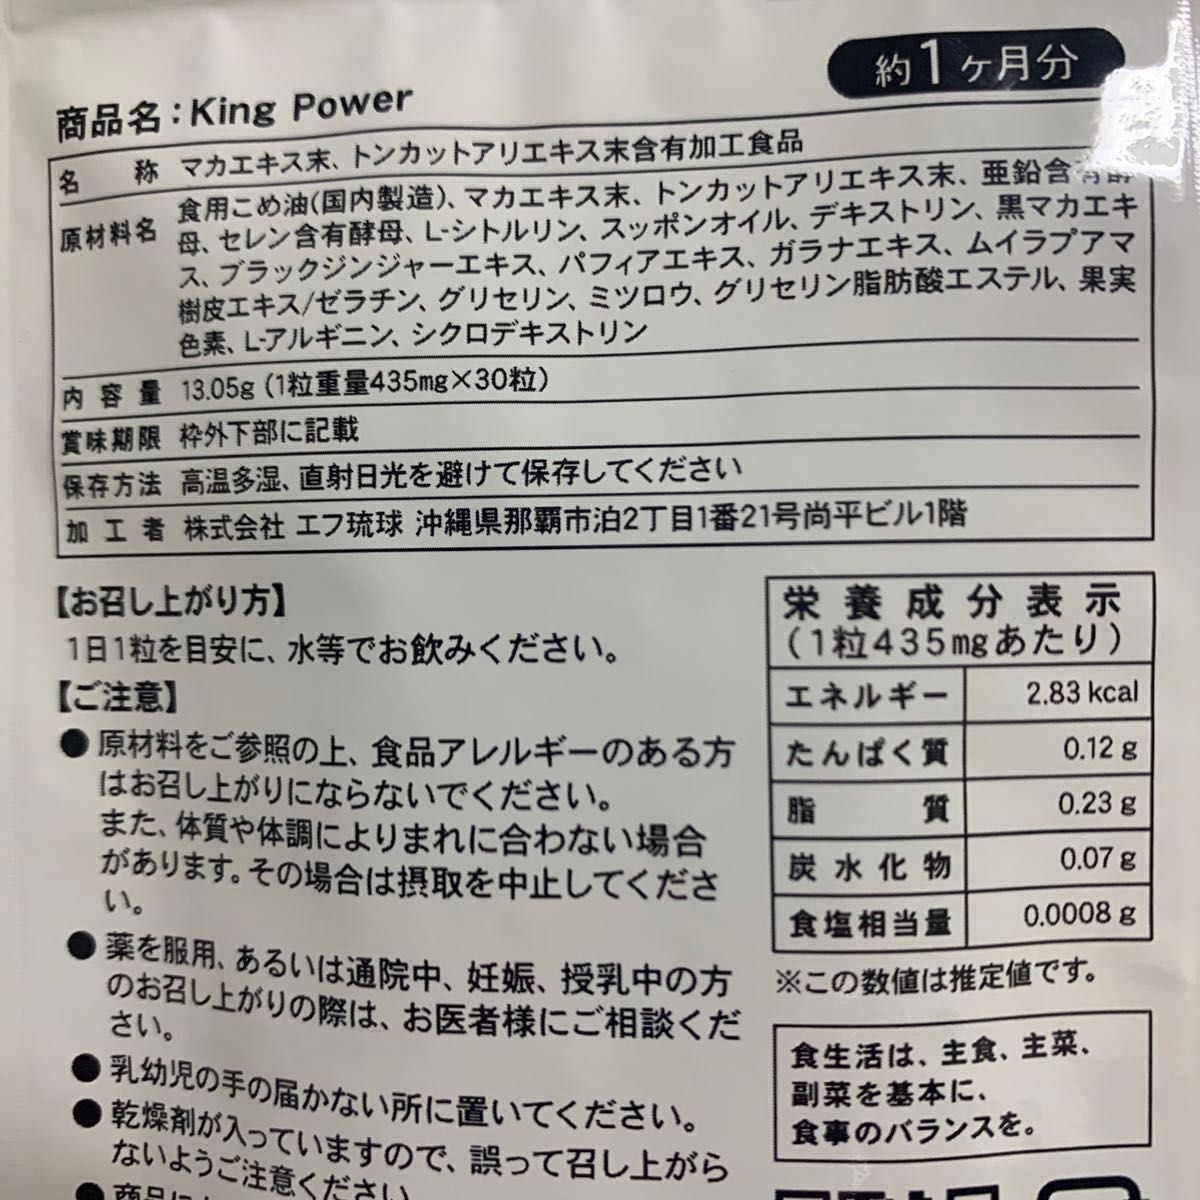 King power・キングパワー マカエキス末 トンカットアリエキス末 スッポンオイル 黒マカエキス 30粒×2袋 即購入OK